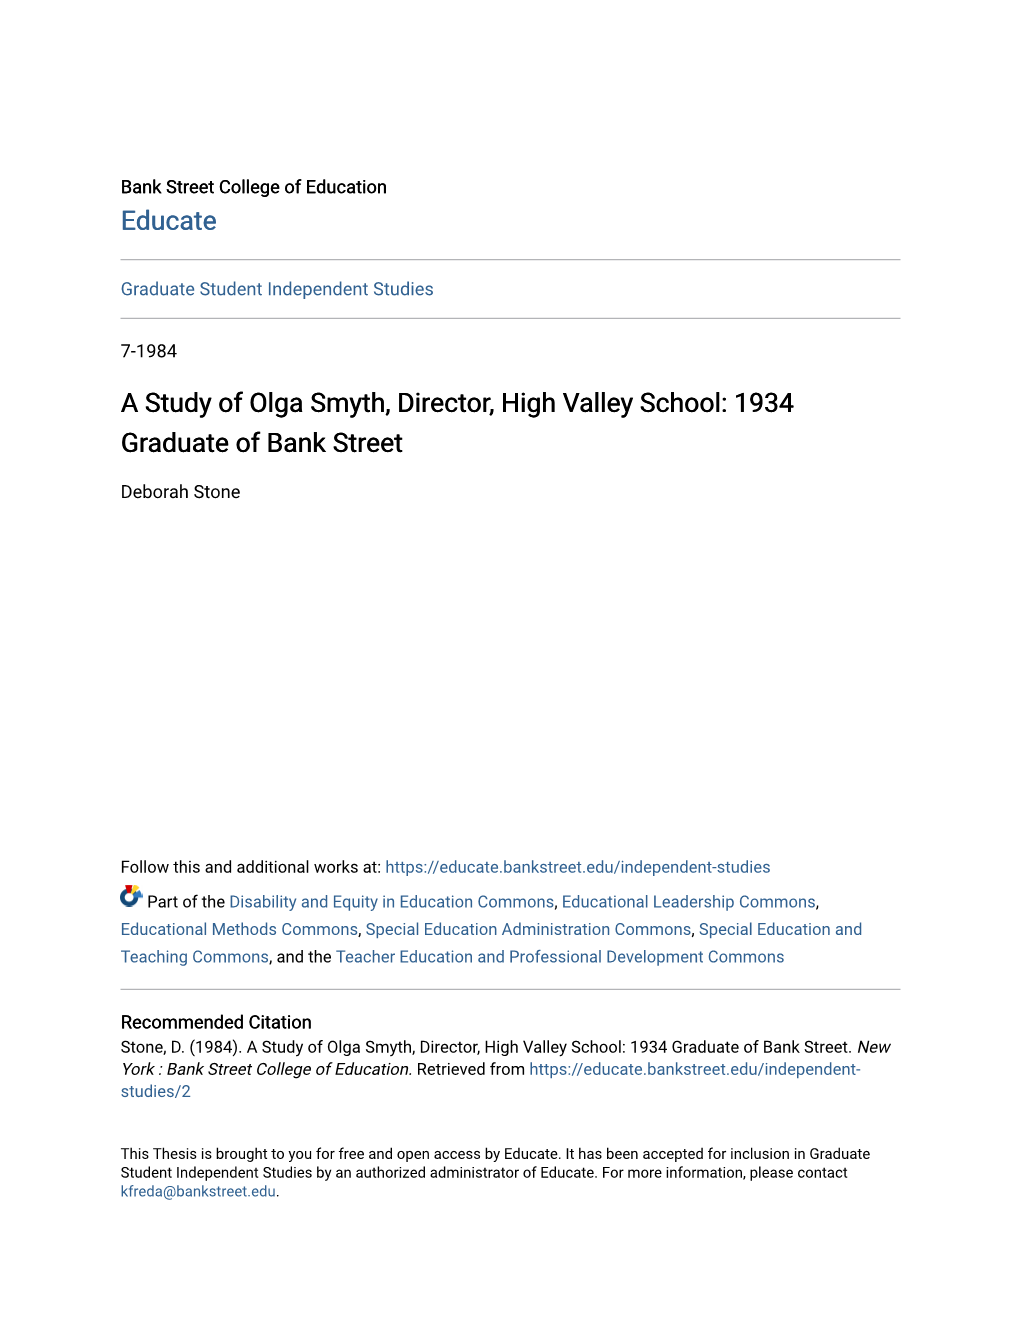 A Study of Olga Smyth, Director, High Valley School: 1934 Graduate of Bank Street